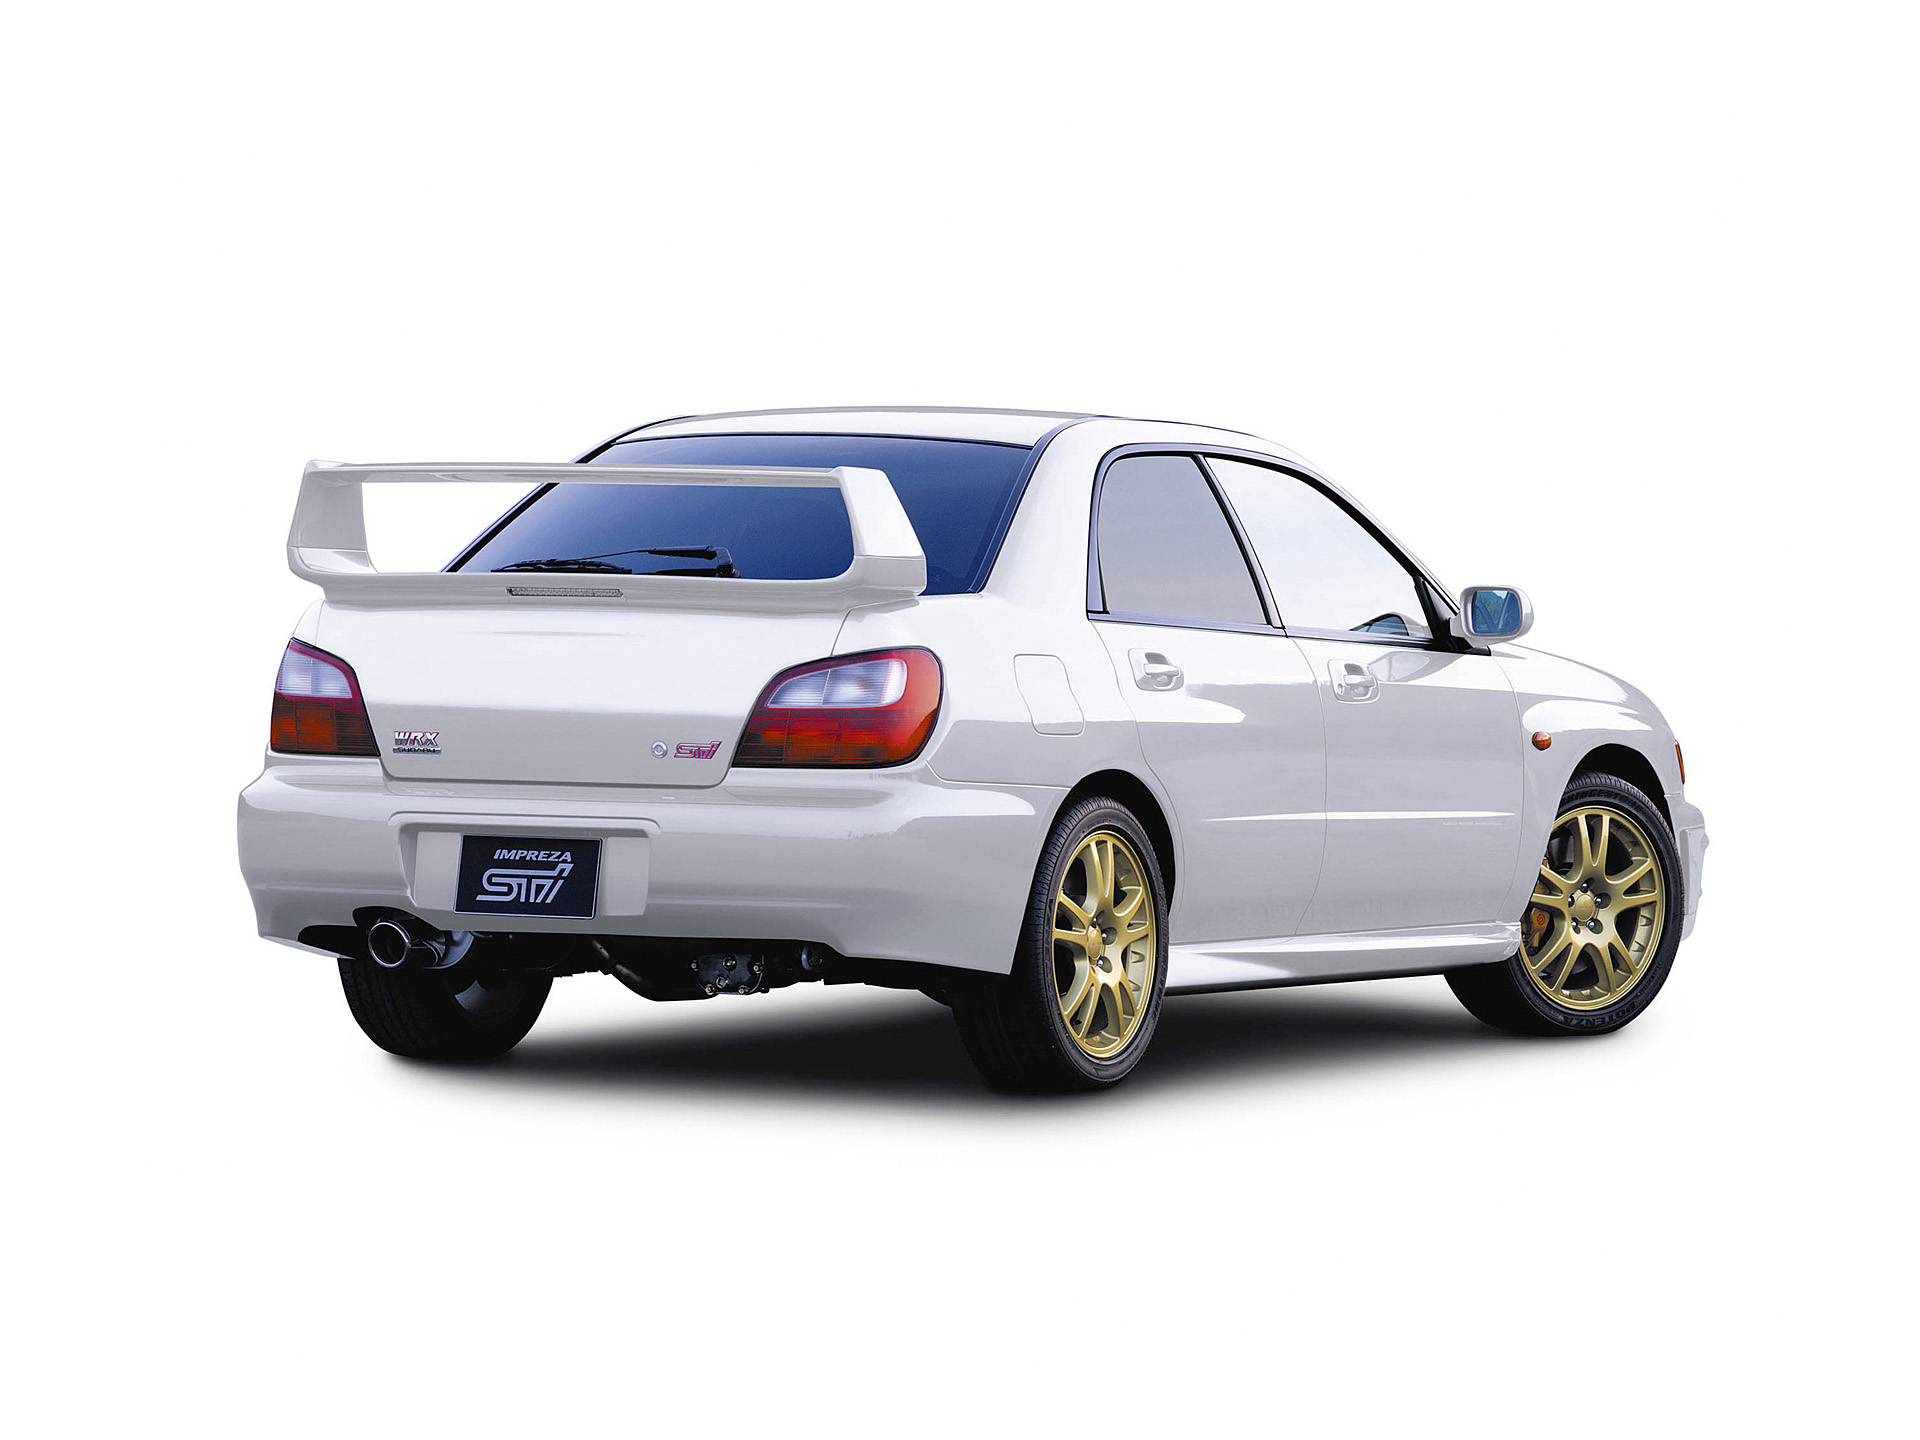  2002 Subaru Impreza WRX STI Wallpaper.